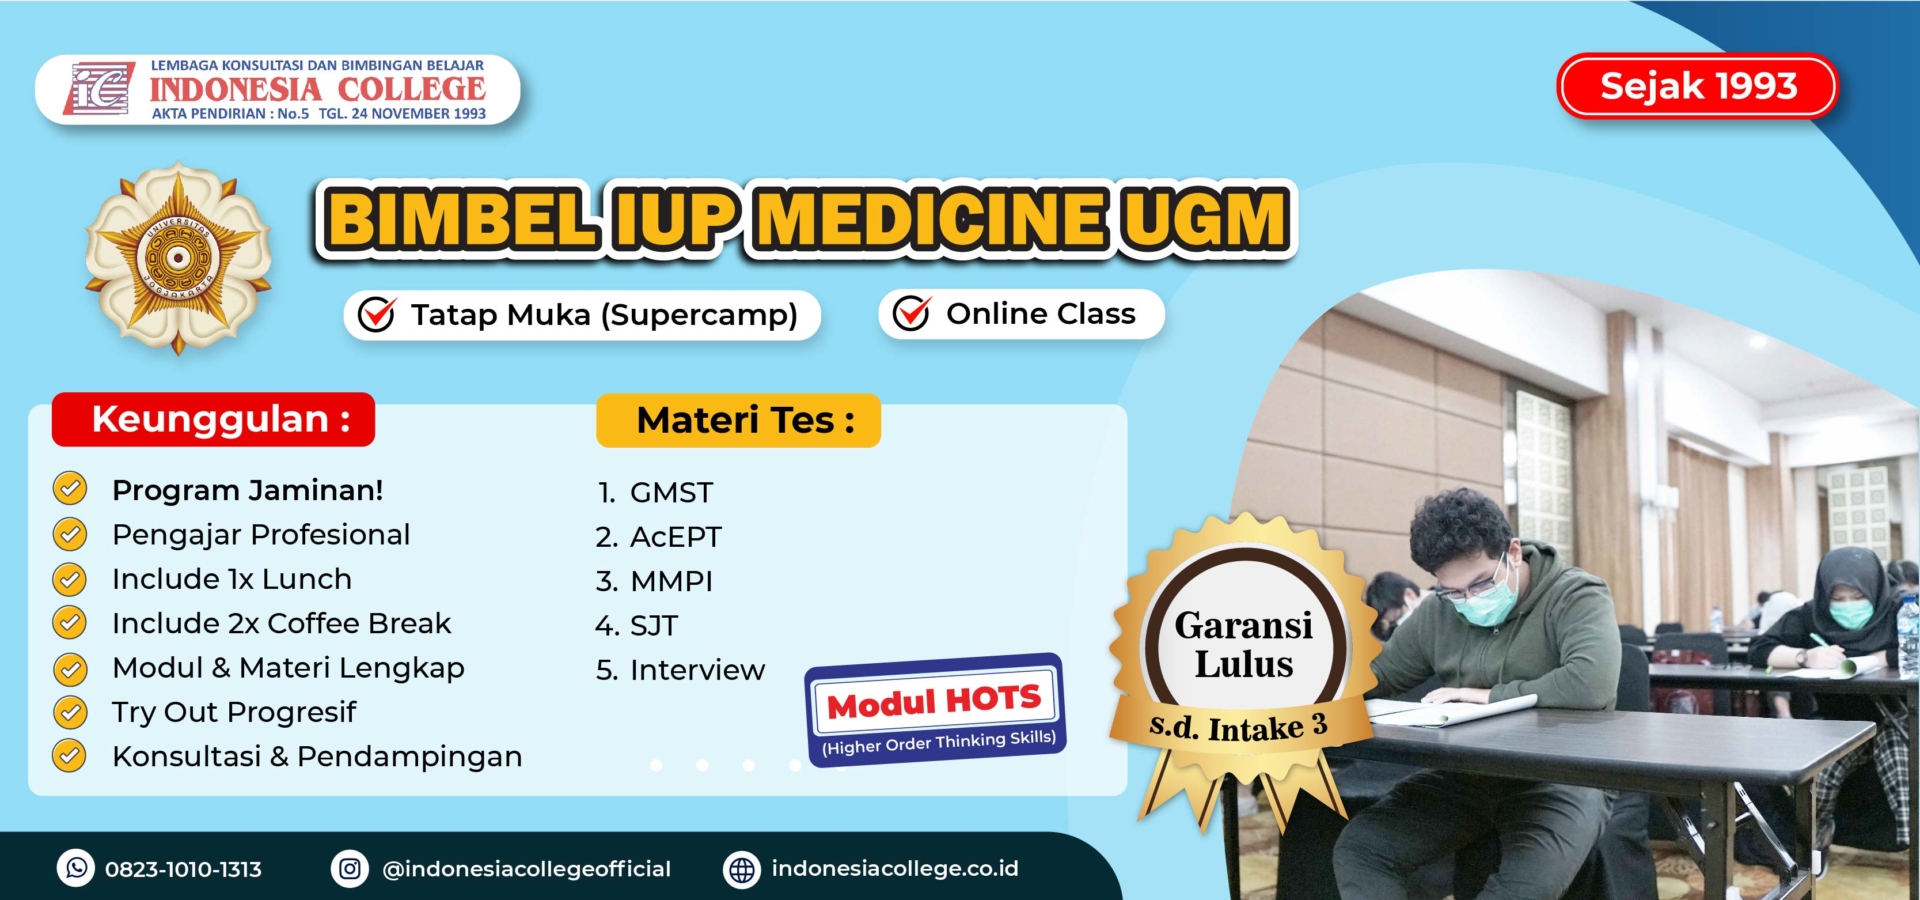 Bimbel Kedokteran IUP UGM - Indonesia College